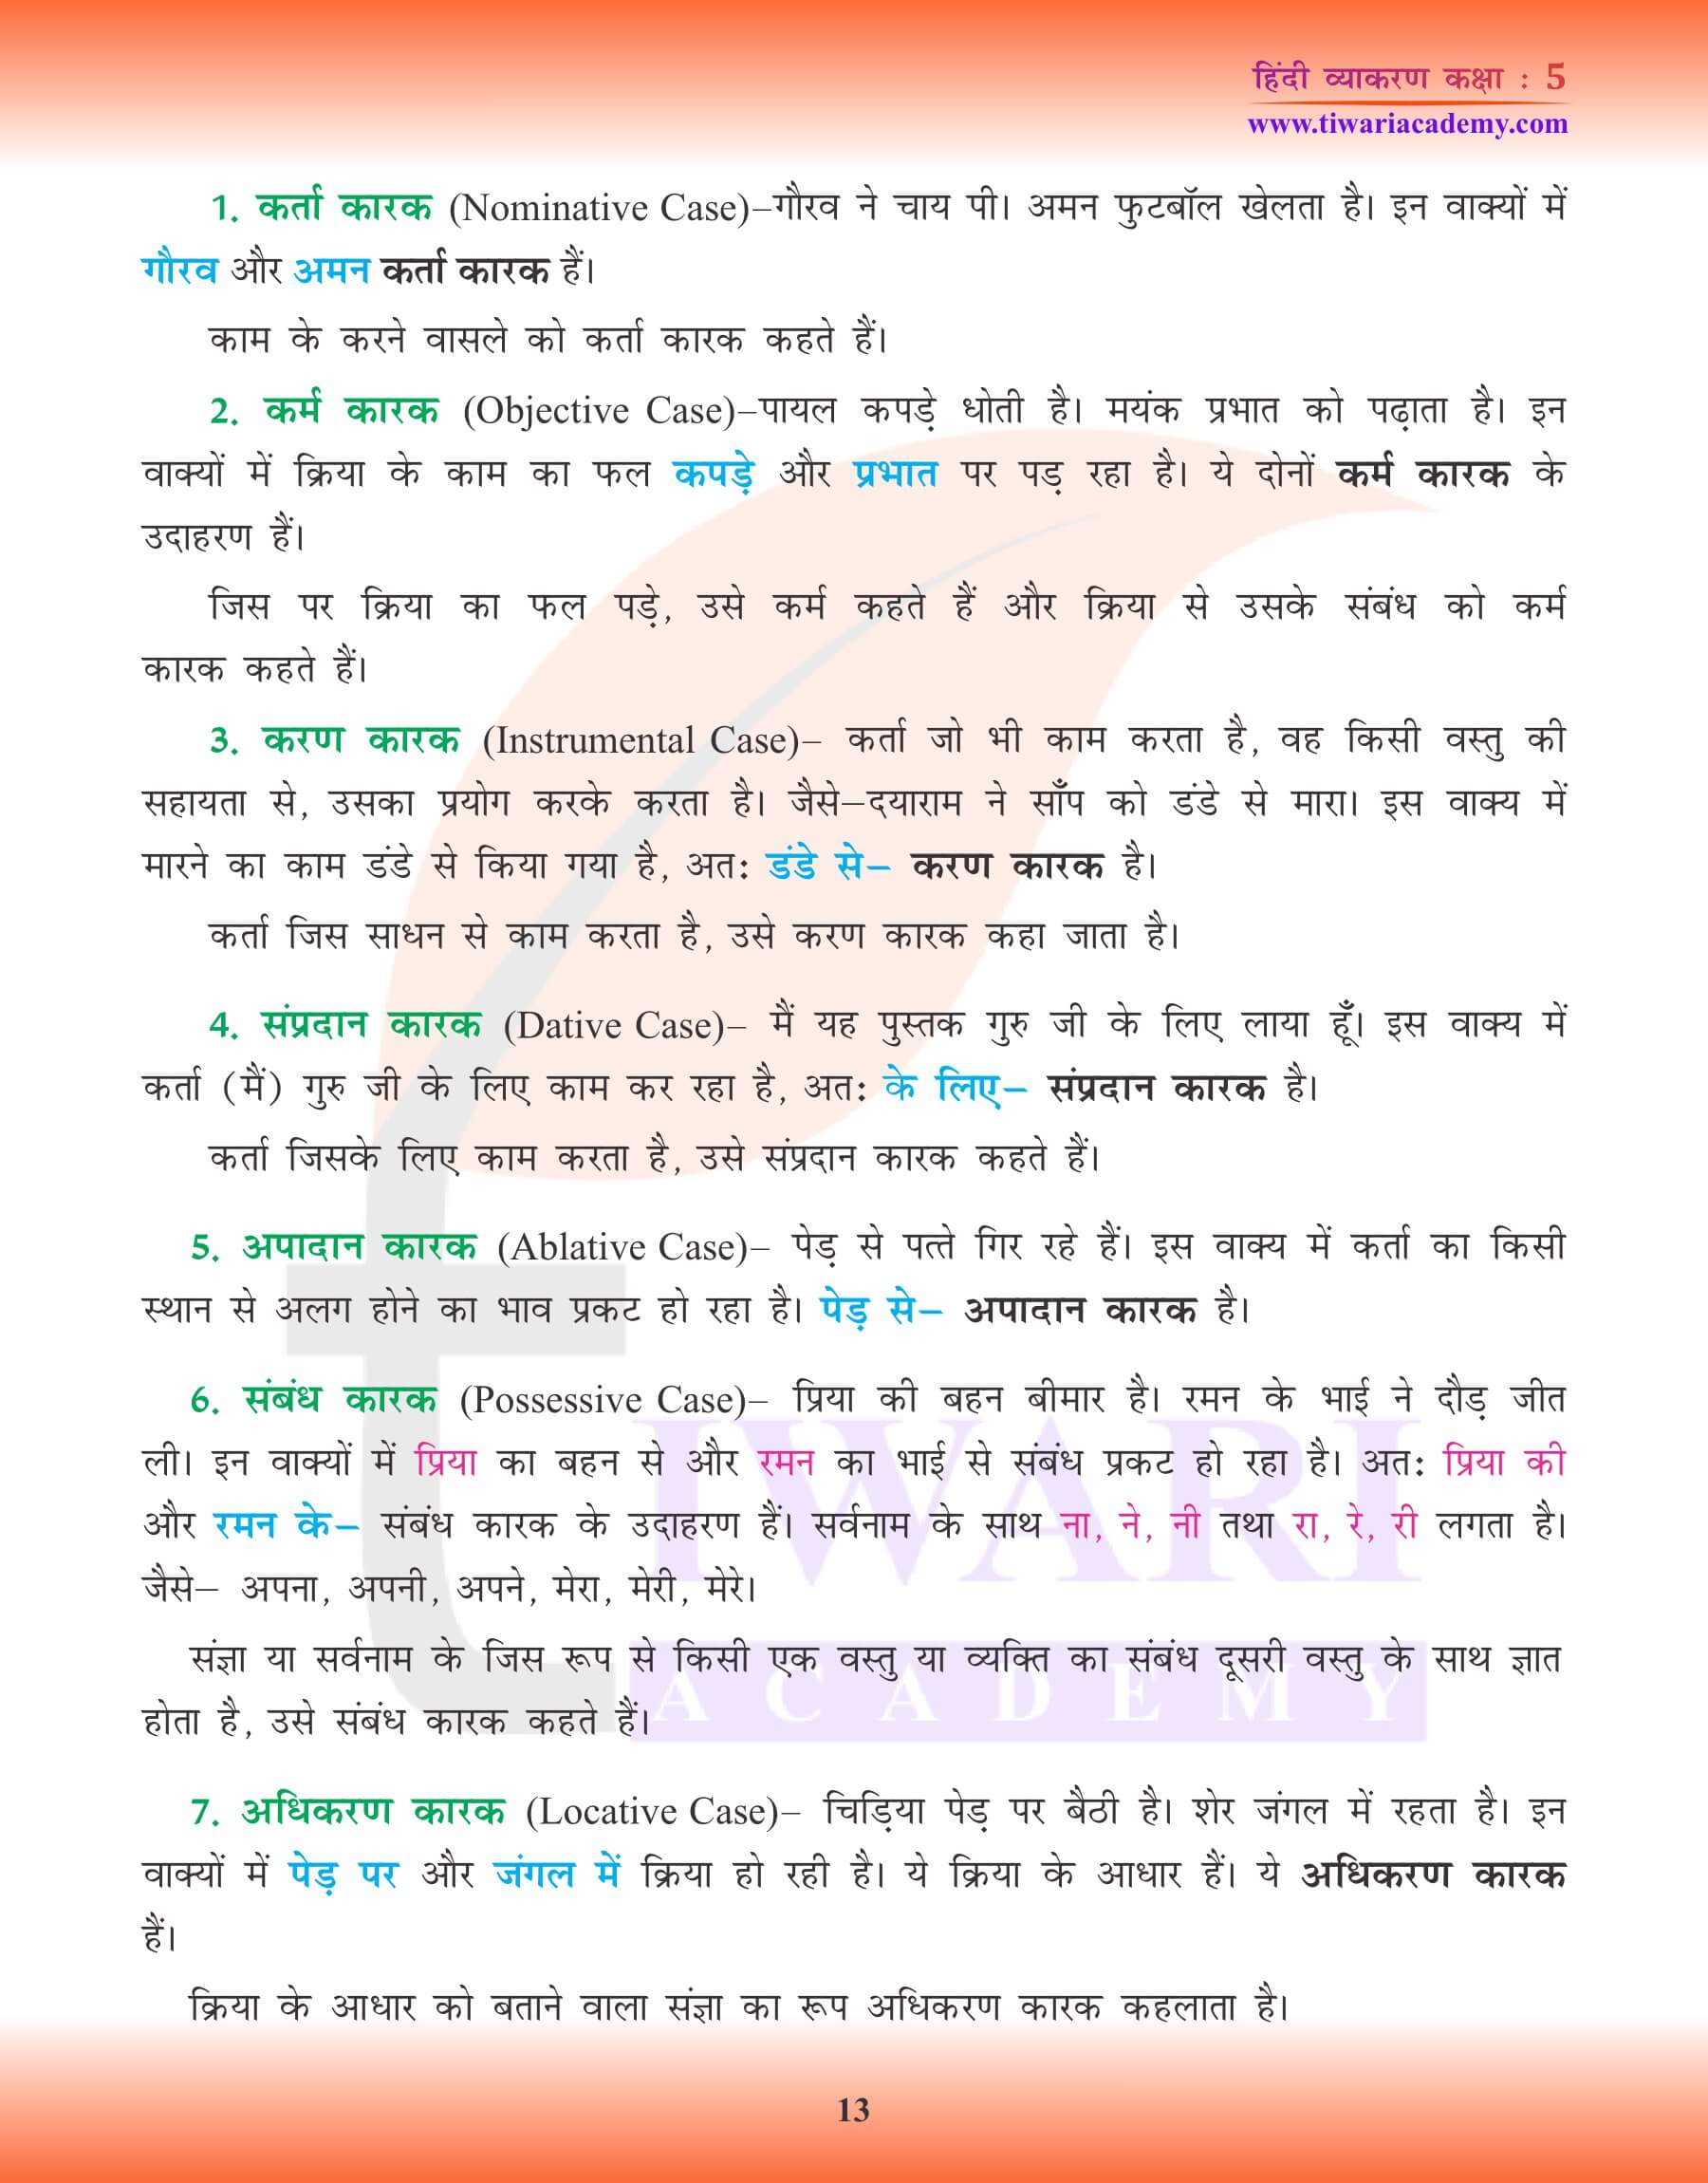 कक्षा 5 हिंदी व्याकरण कारक के उदाहरण